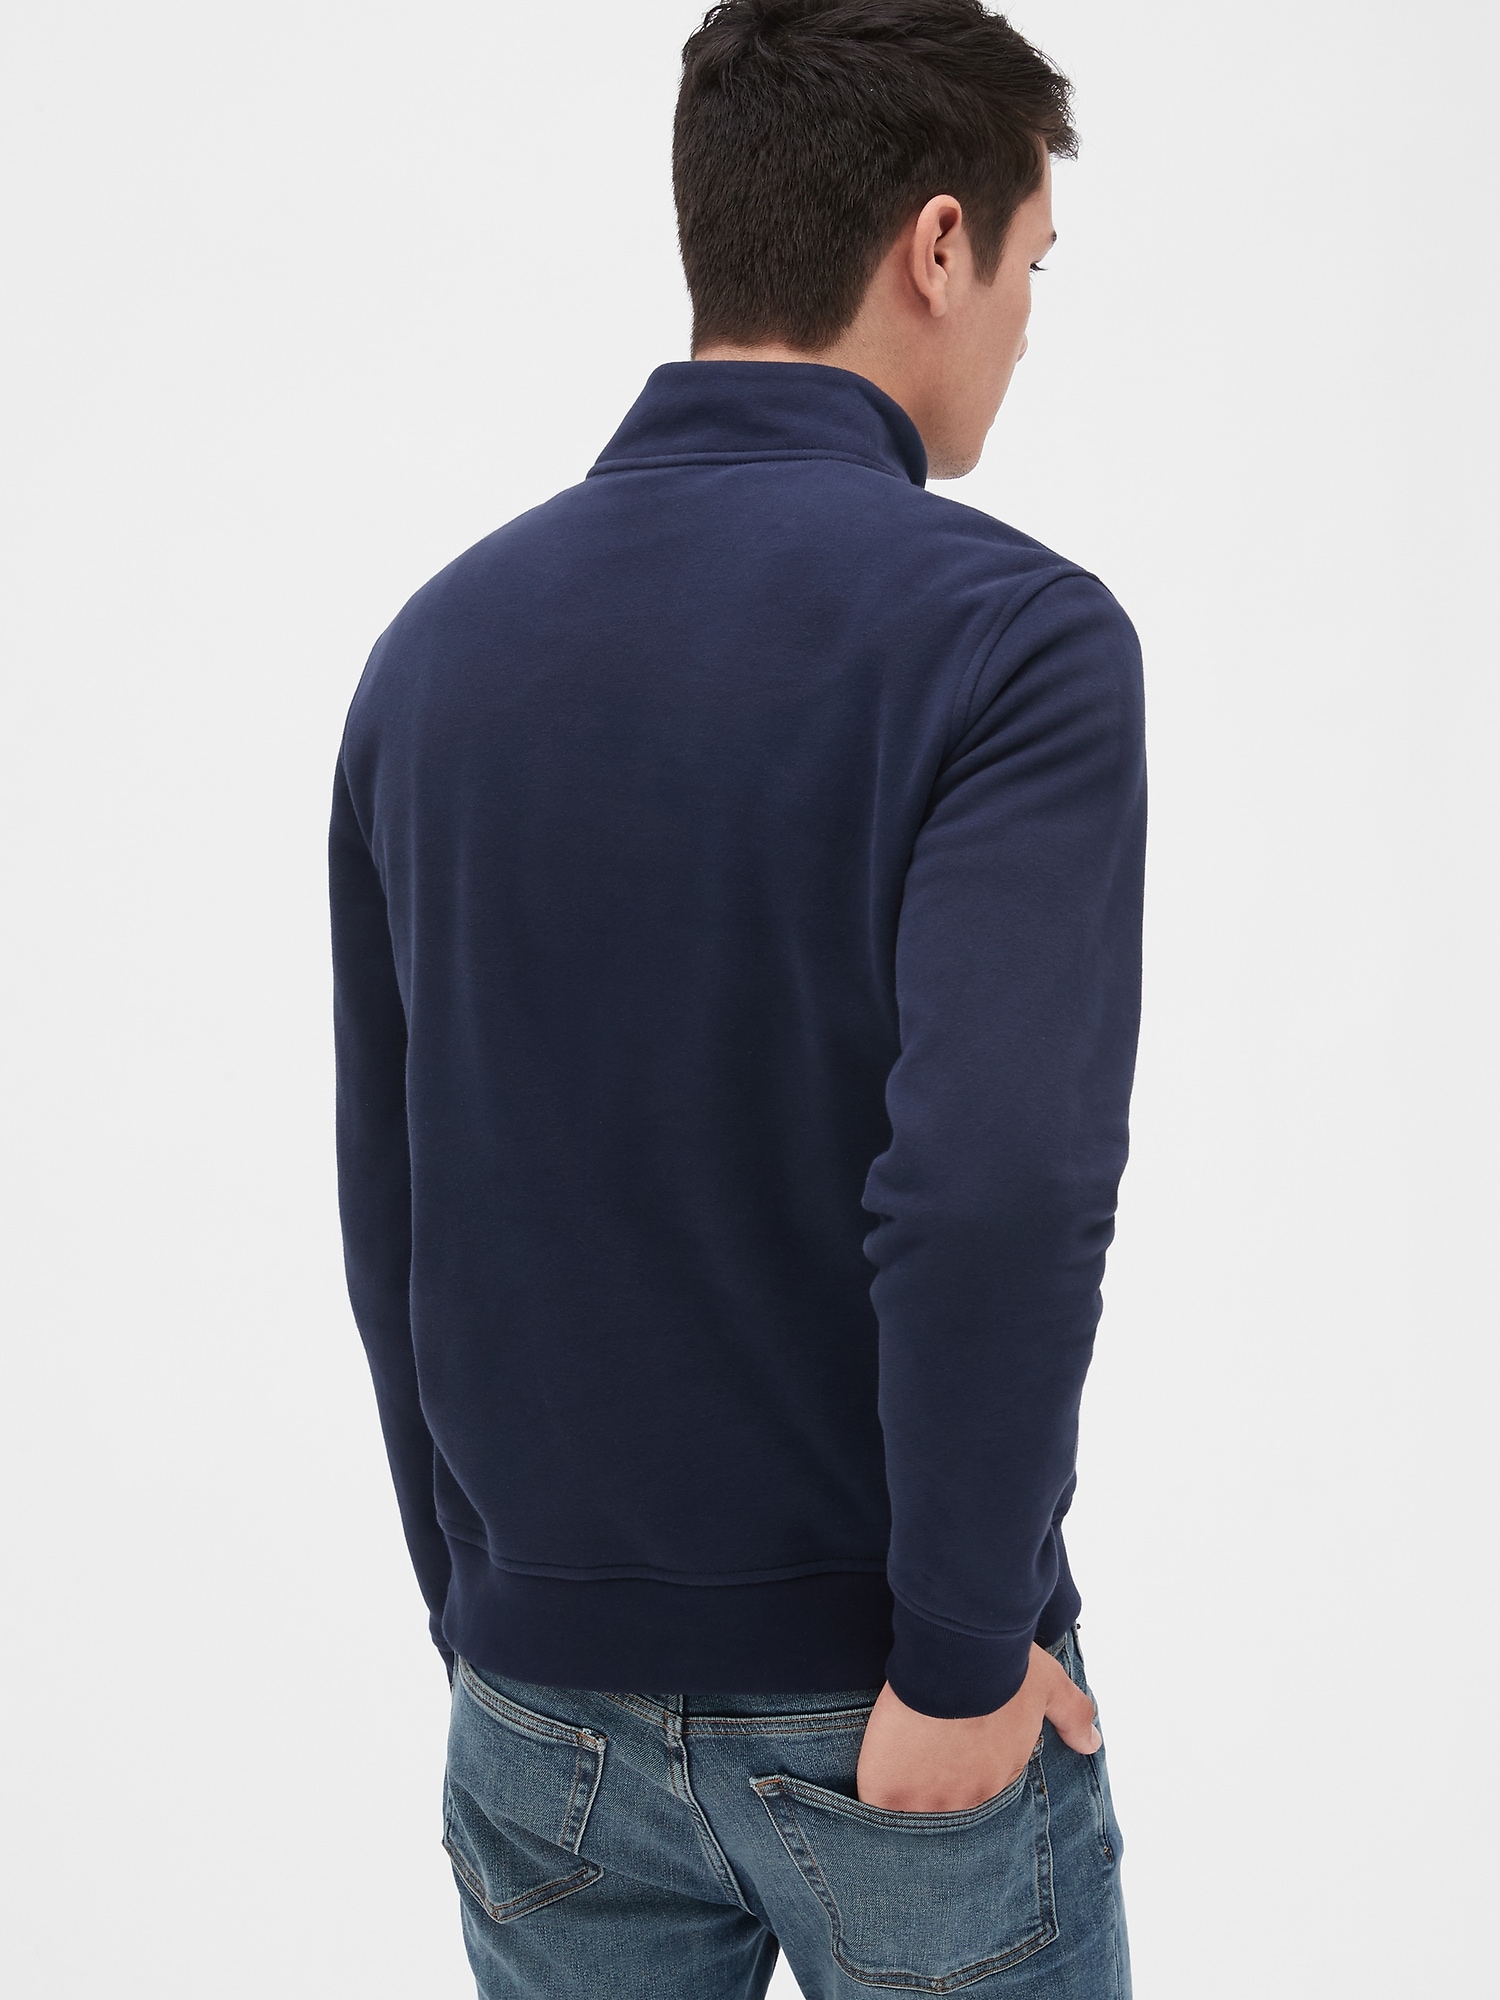 GAP Full Sleeve Applique Men Sweatshirt - Buy GAP Full Sleeve